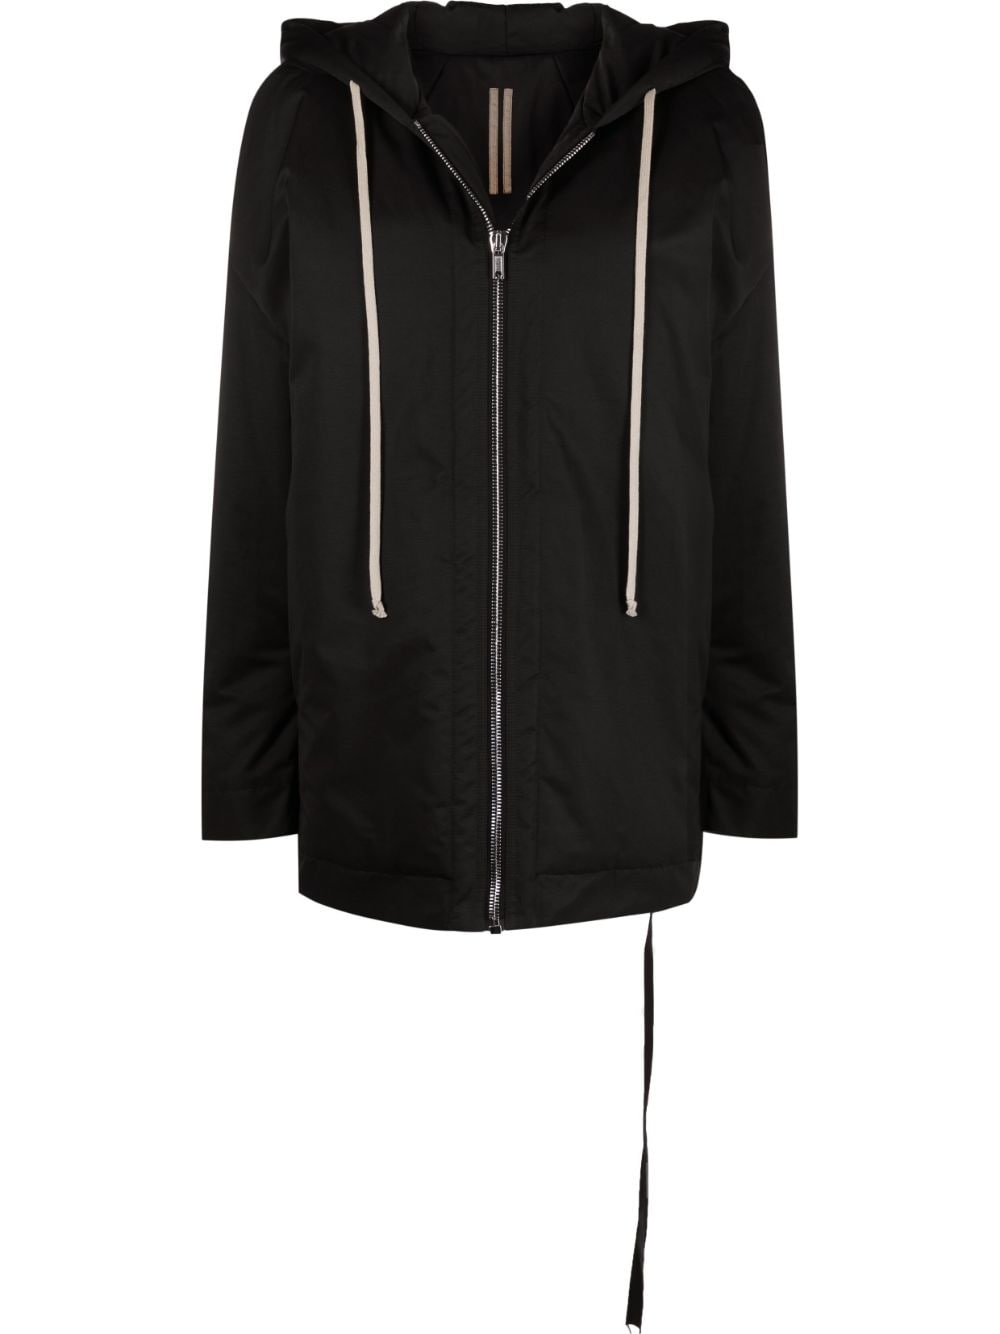 tassel-detail hooded jacket - 1